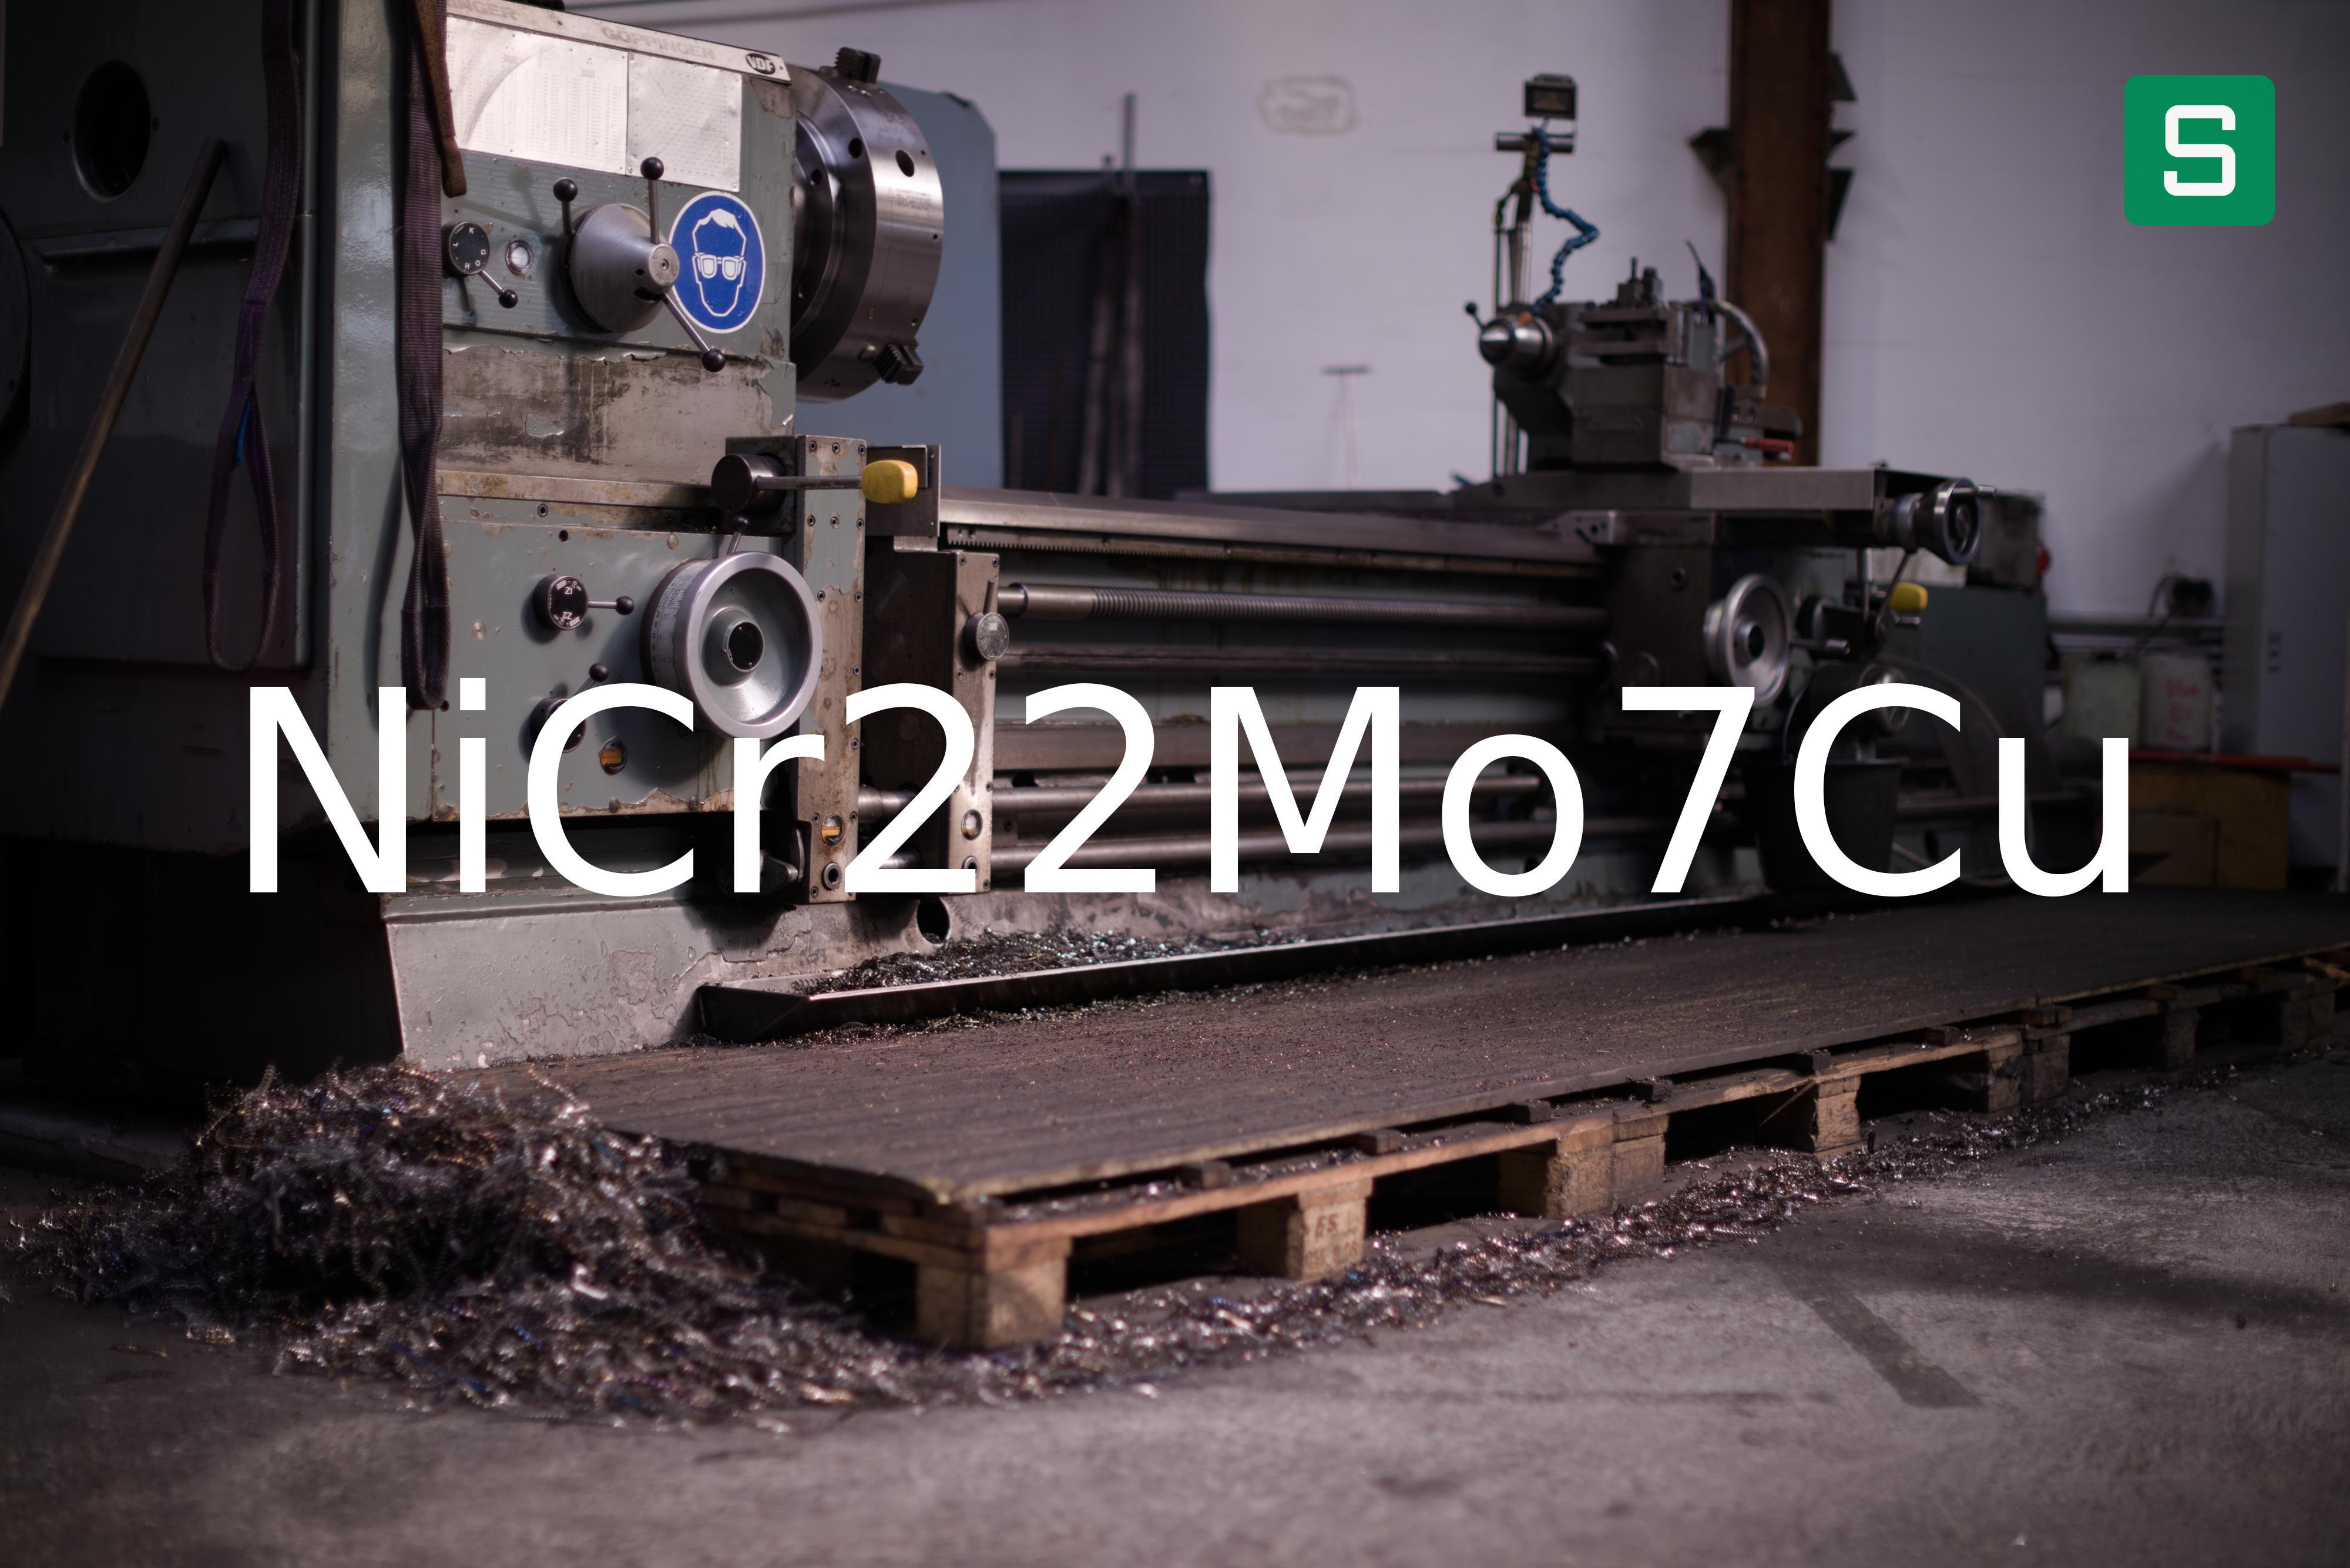 Steel Material: NiCr22Mo7Cu